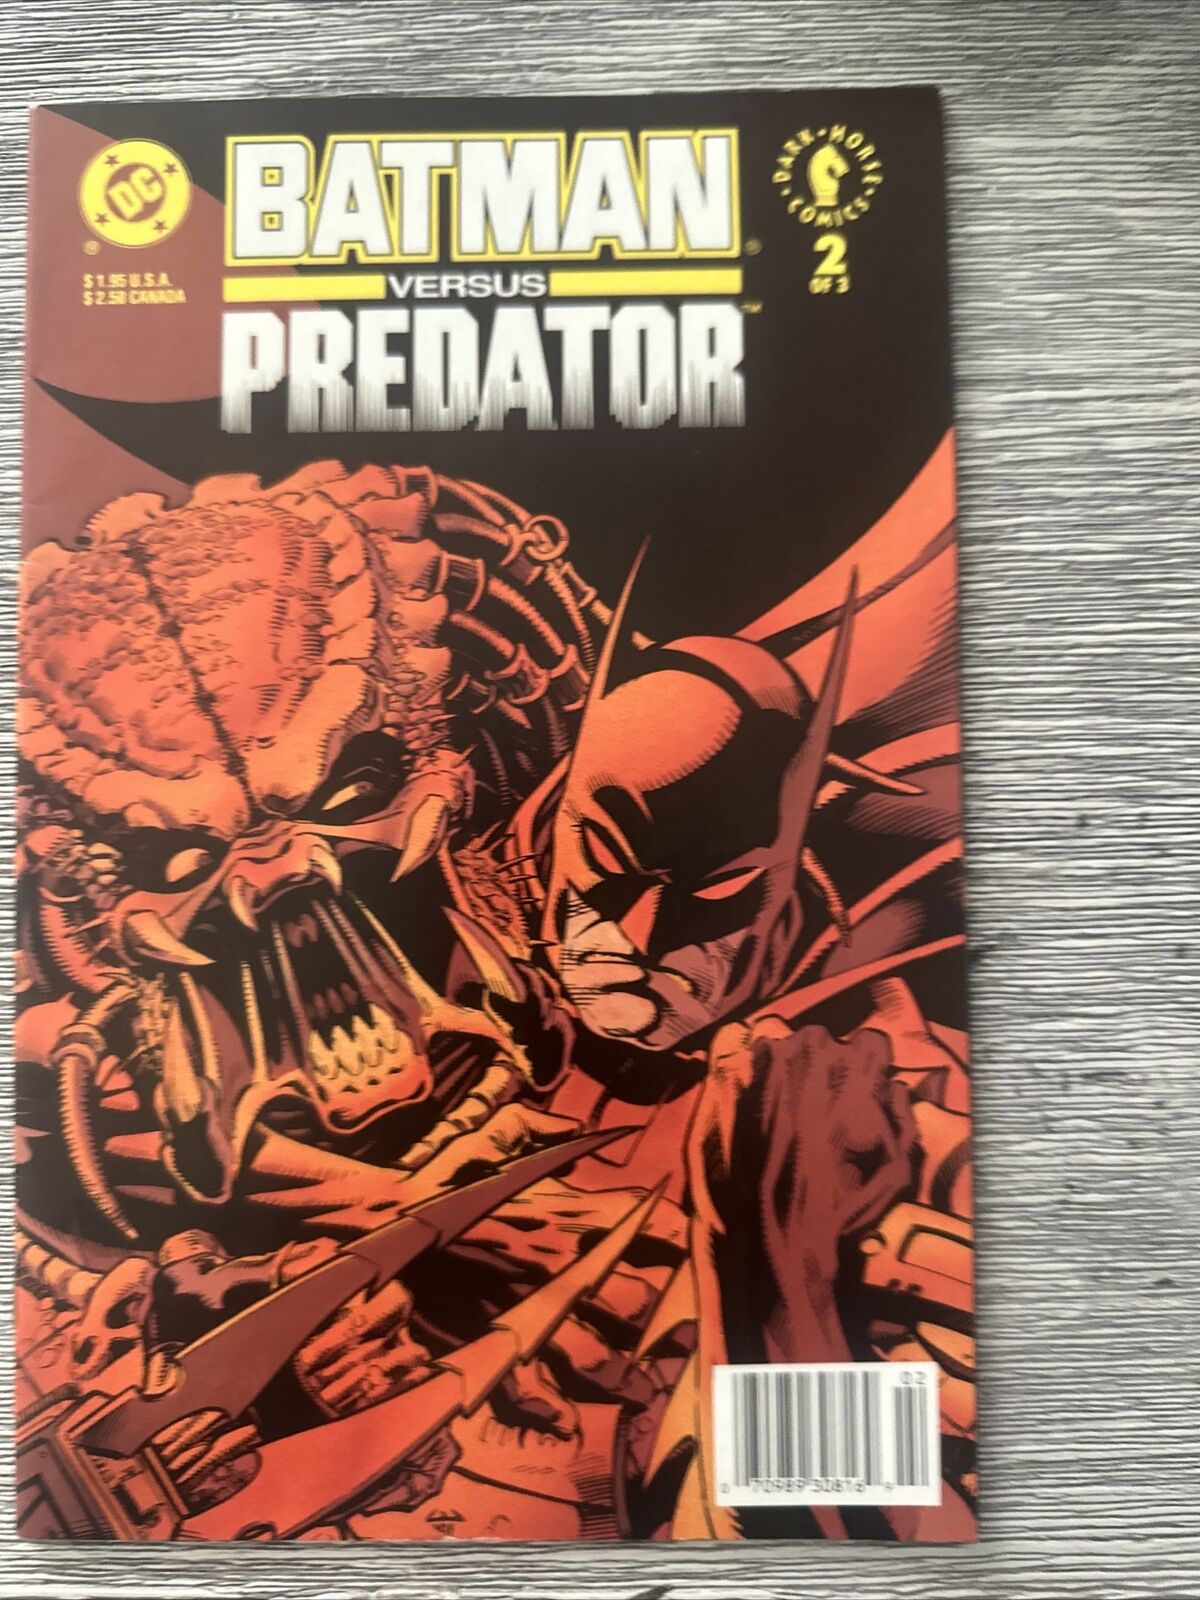 Batman versus Predator #2 in Bag & Boarder